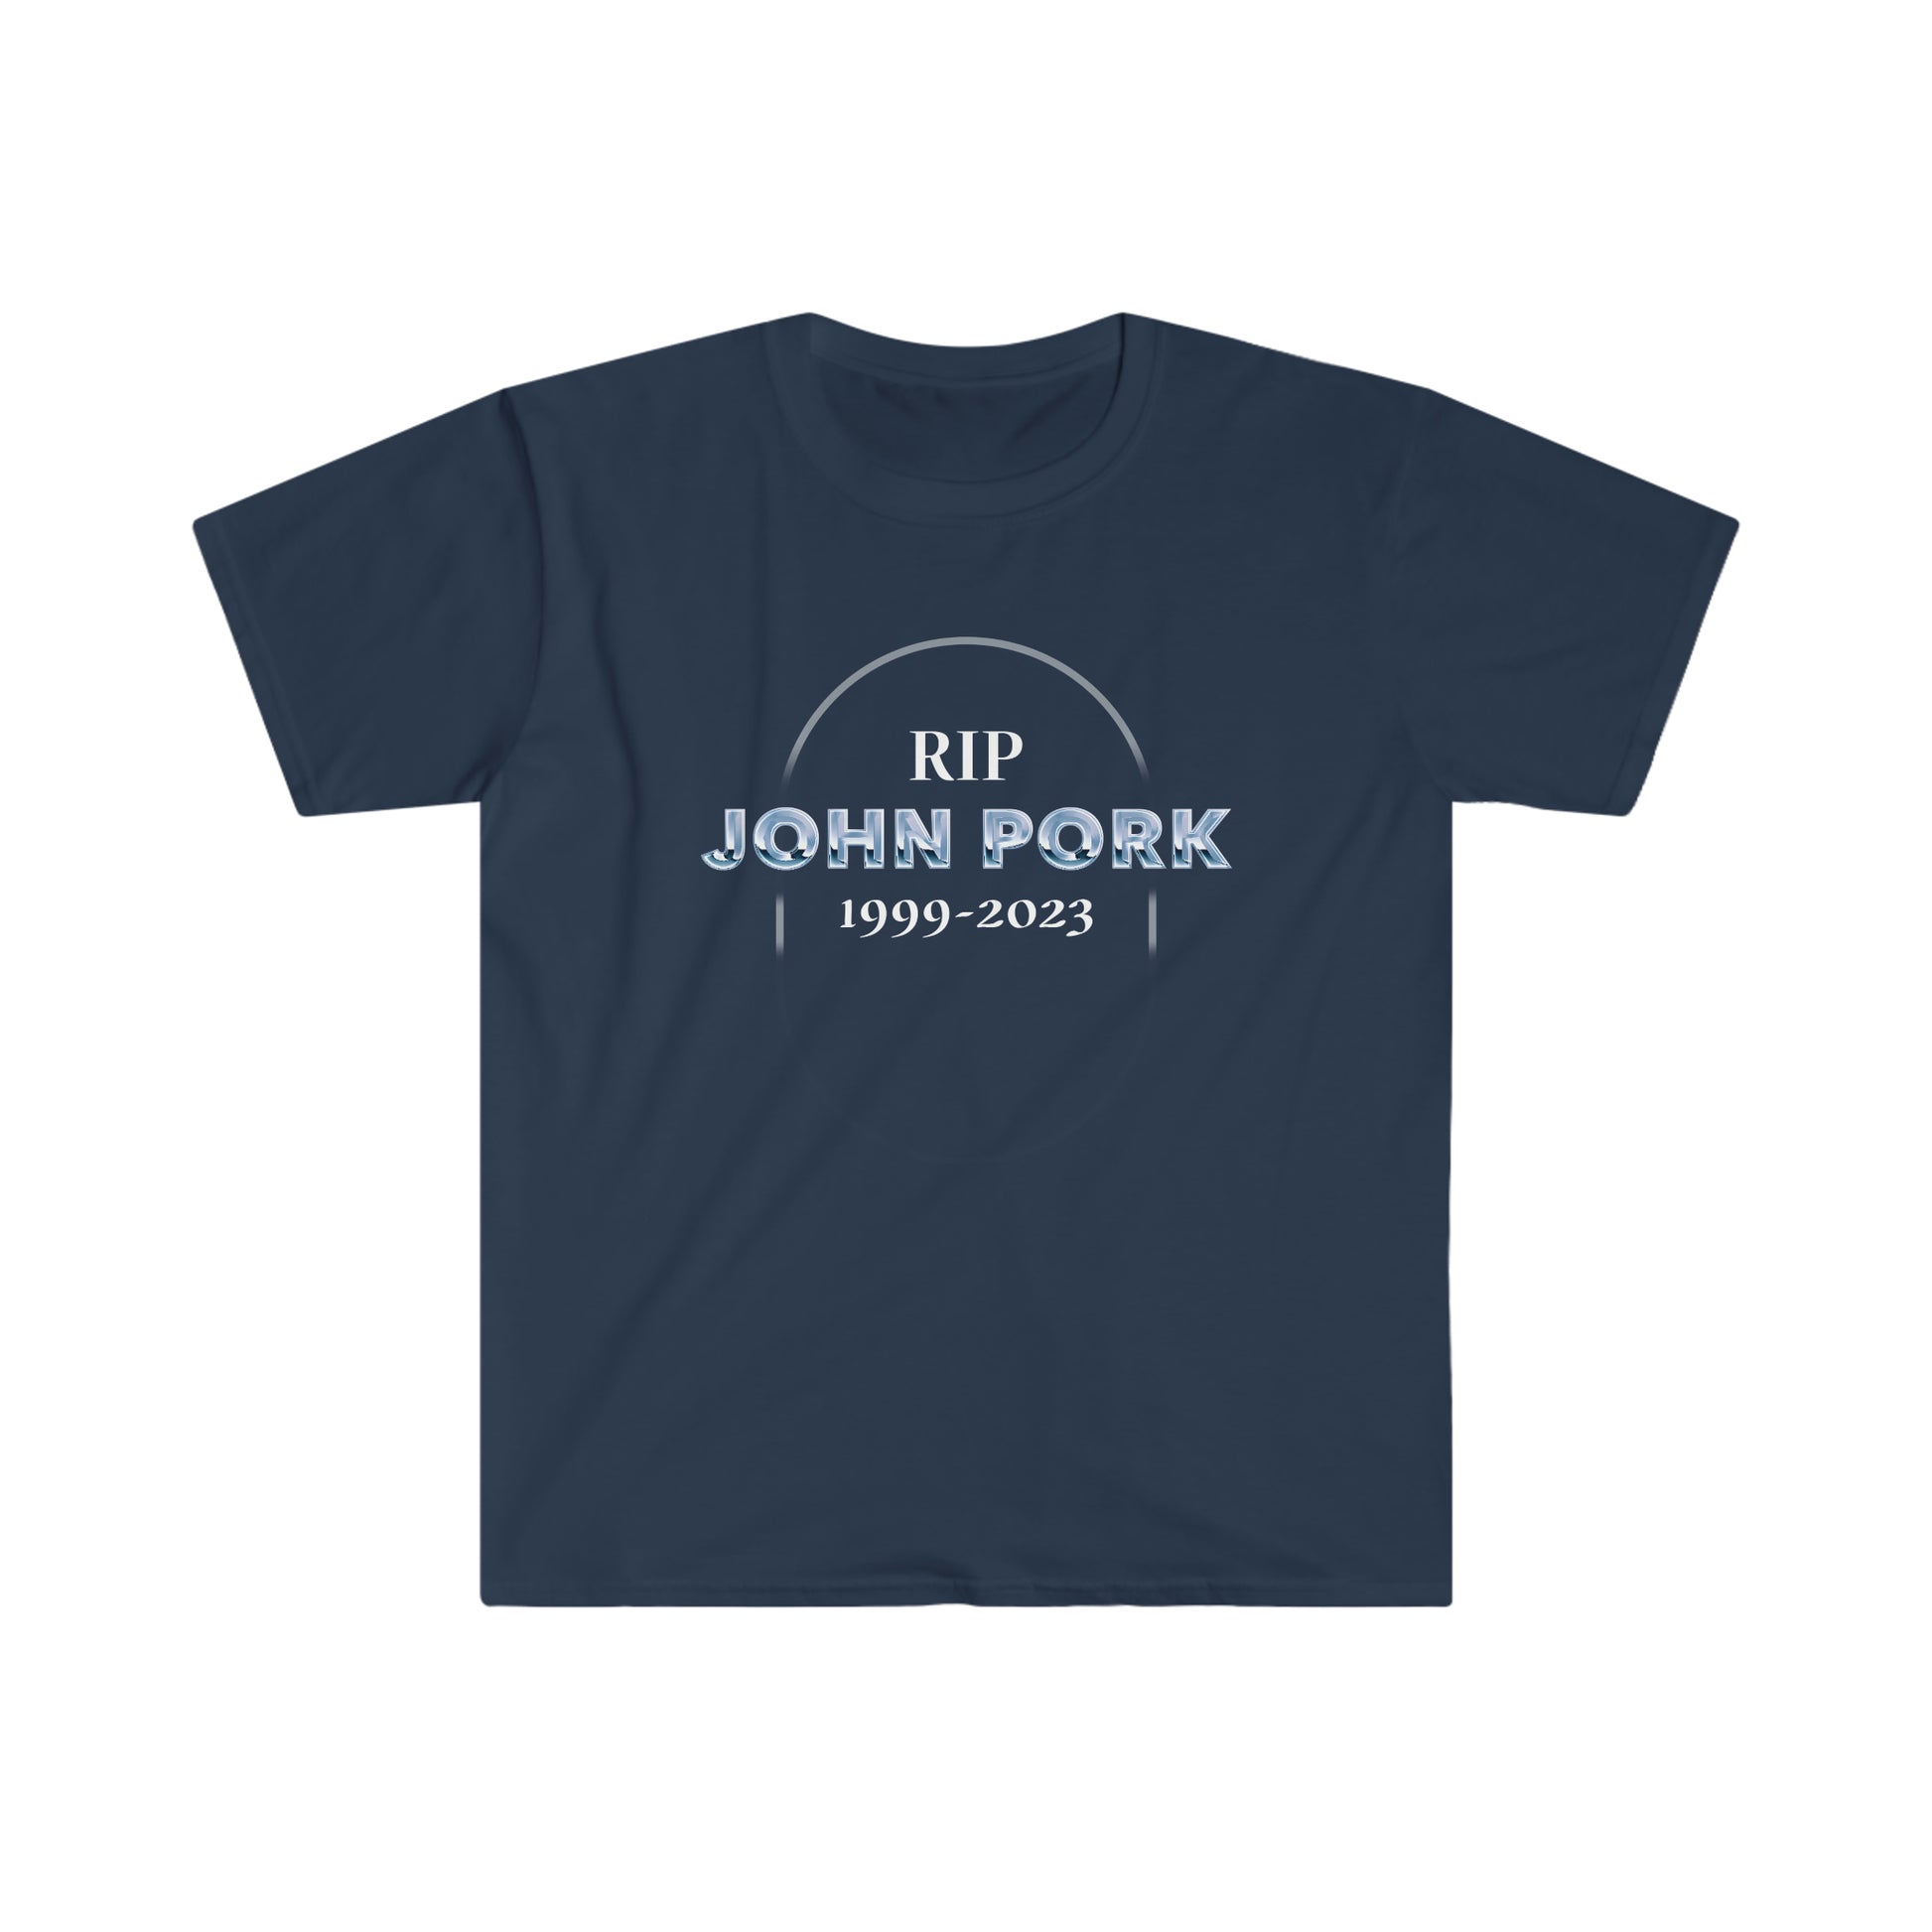 Rip john pork TEE, hoodie, sweater and long sleeve